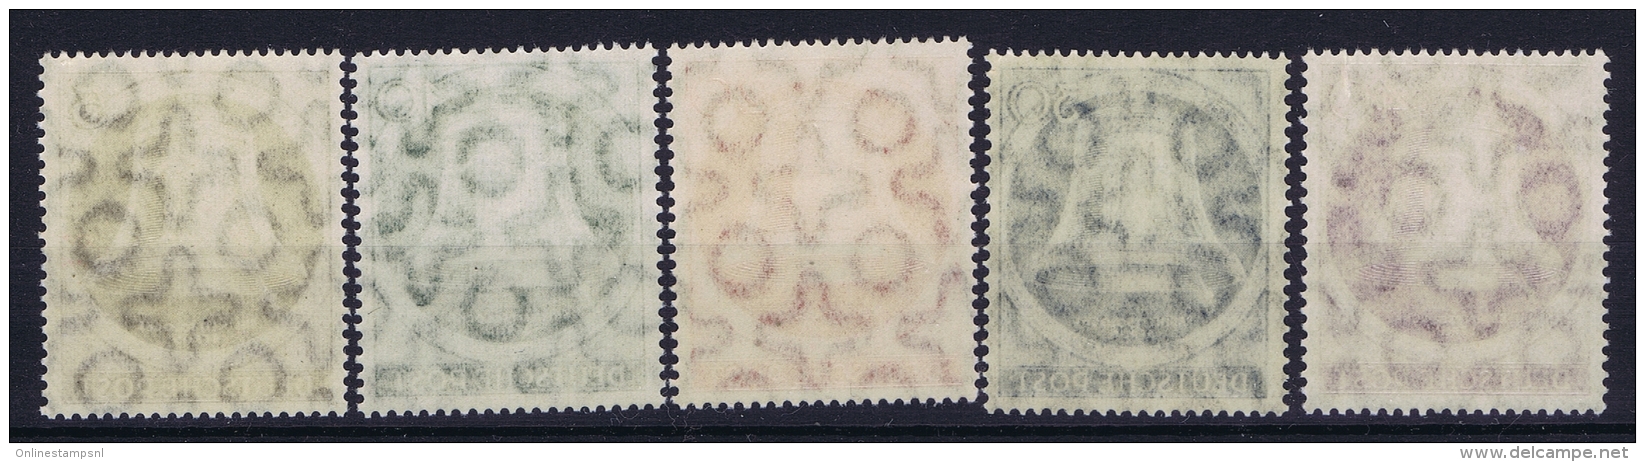 Germany Berlin 1951 Mi Nr 75 - 79 MNH/** Postfrisch - Unused Stamps